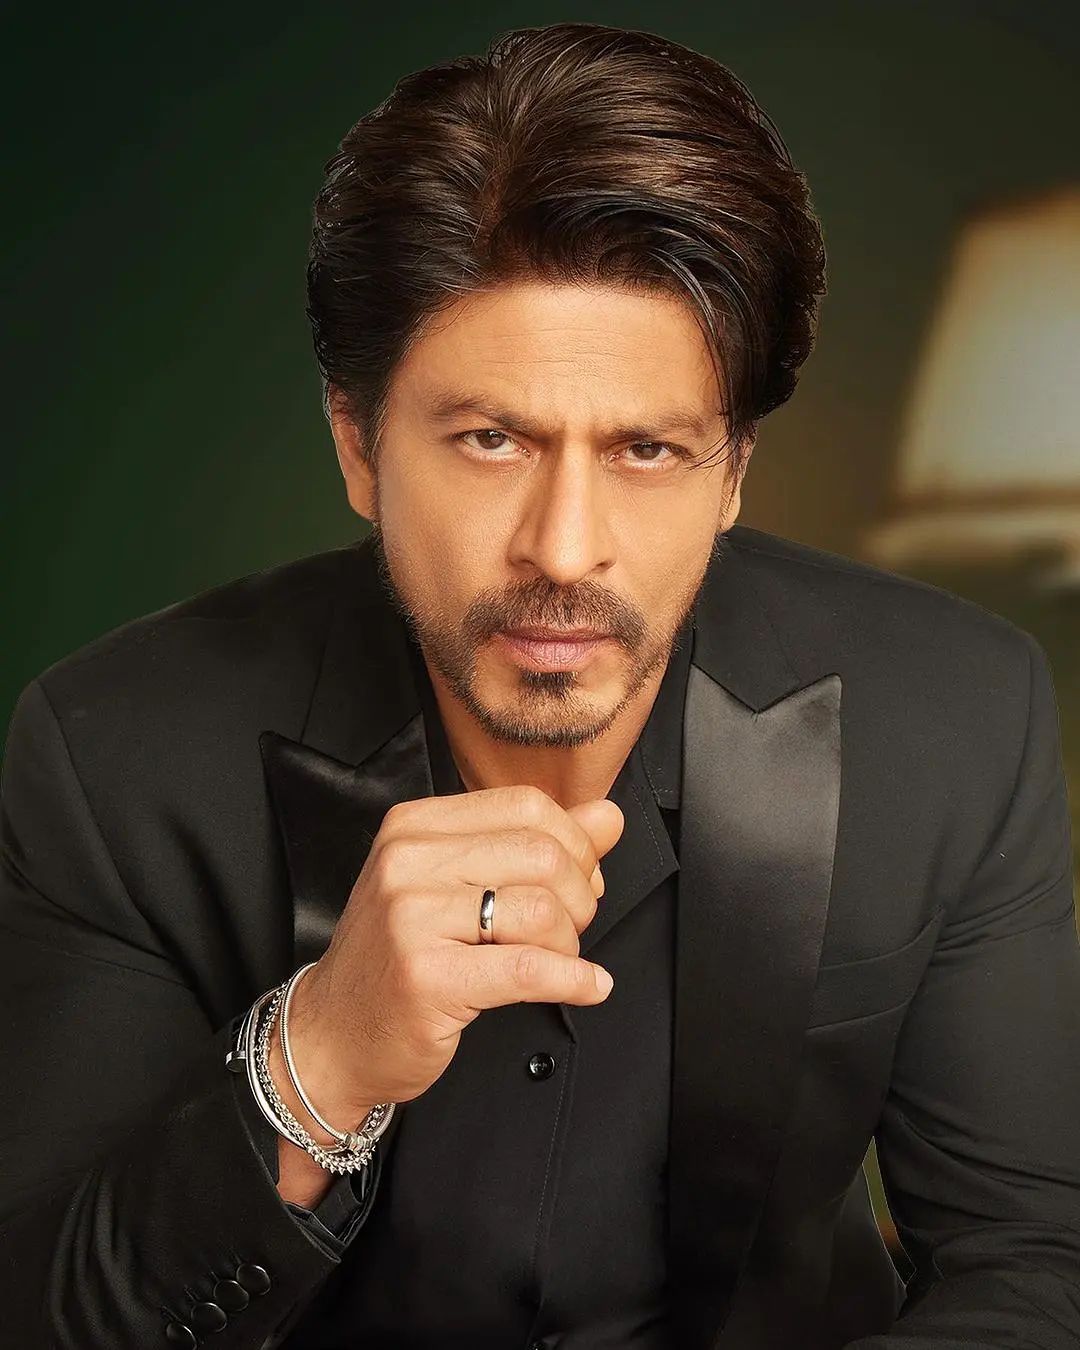 Trendiest hairstyle poll: Shah Rukh Khan beats Salman Khan and Fawad Khan |  TheHealthSite.com